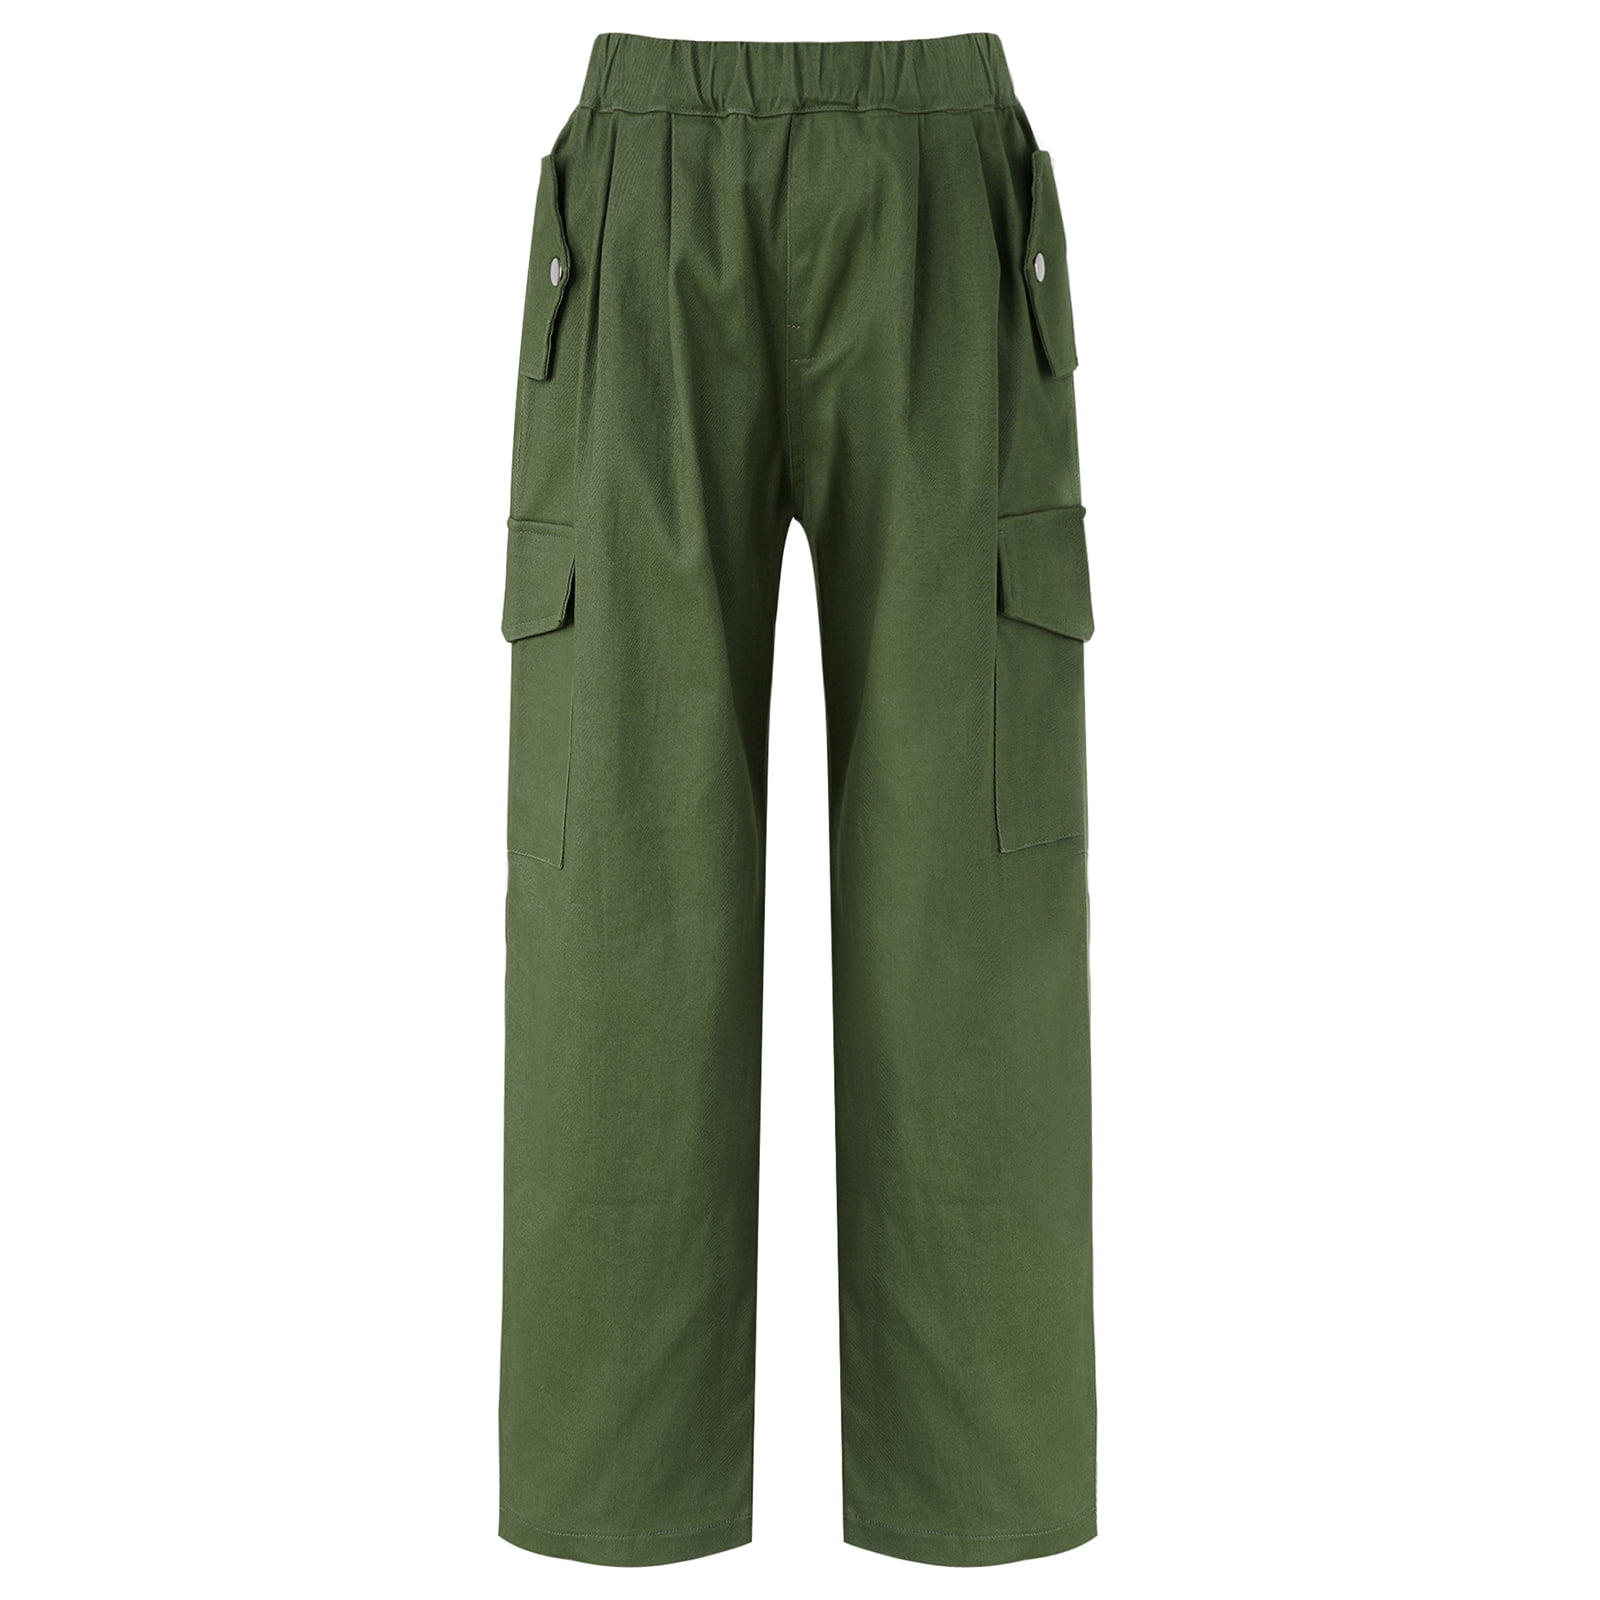 INHZOY Kids Girls Cargo Jogger Pants 4 Pockets Cotton Fashion Bottoms with  Drawstring Green 6